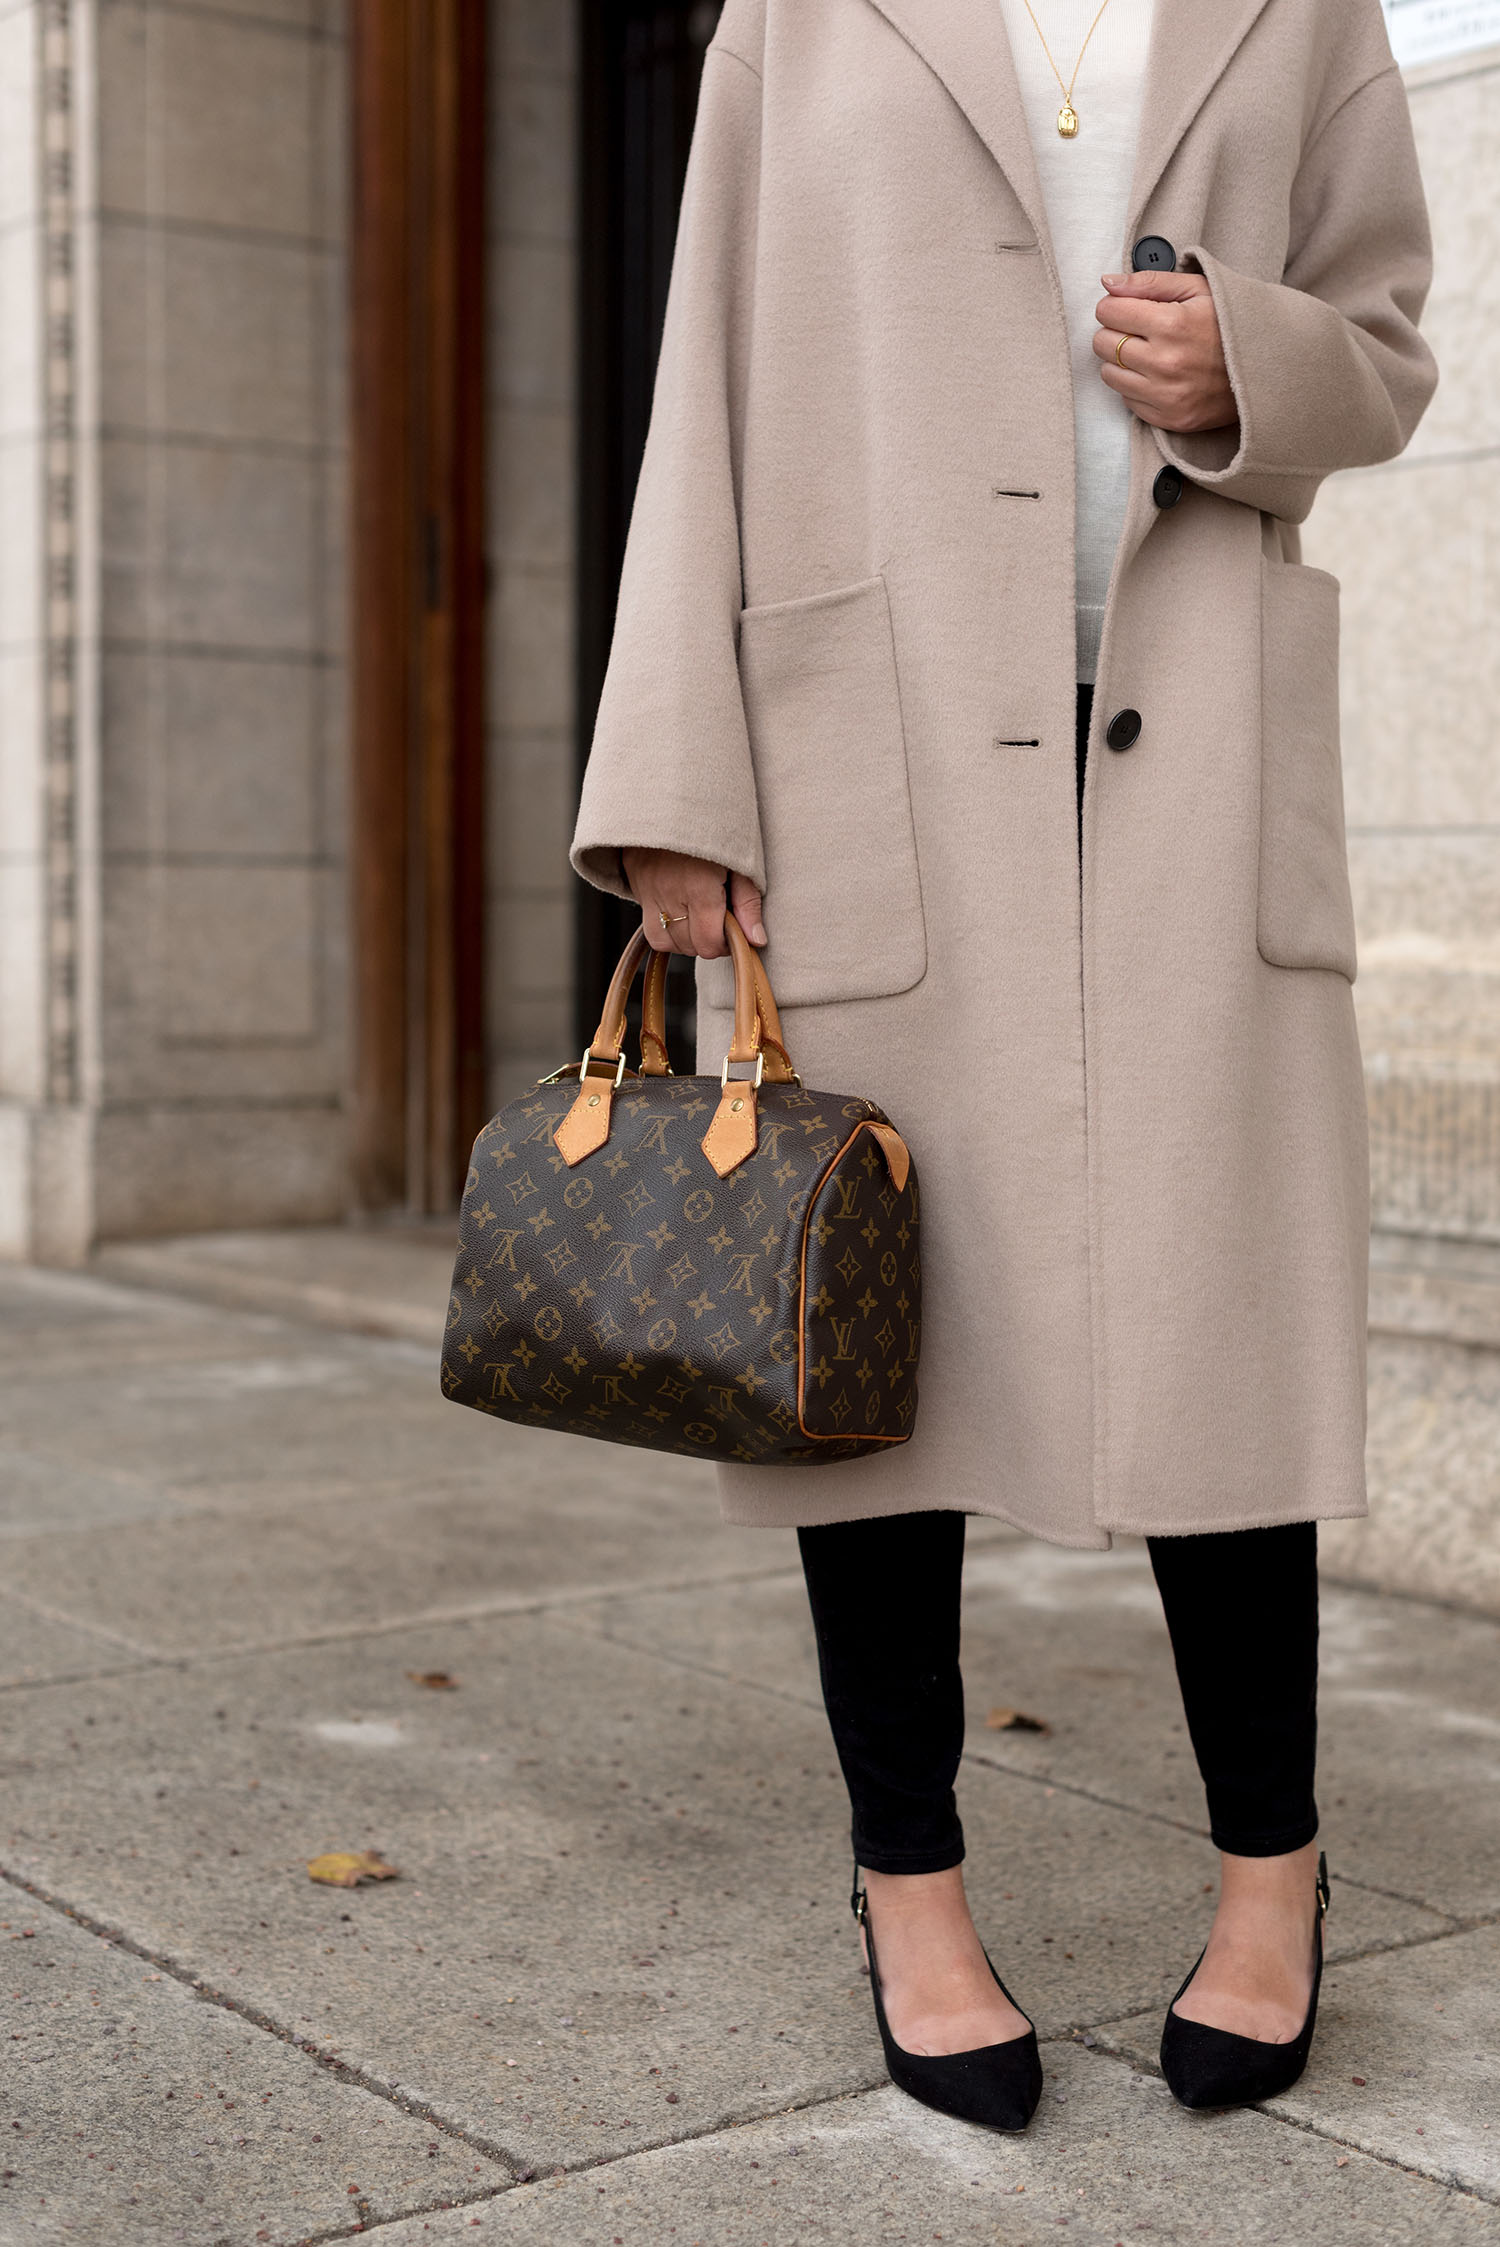 Coco & Vera - Louis Vuitton Speedy 25 handbag, Zara beige coat, Mango kitten heels